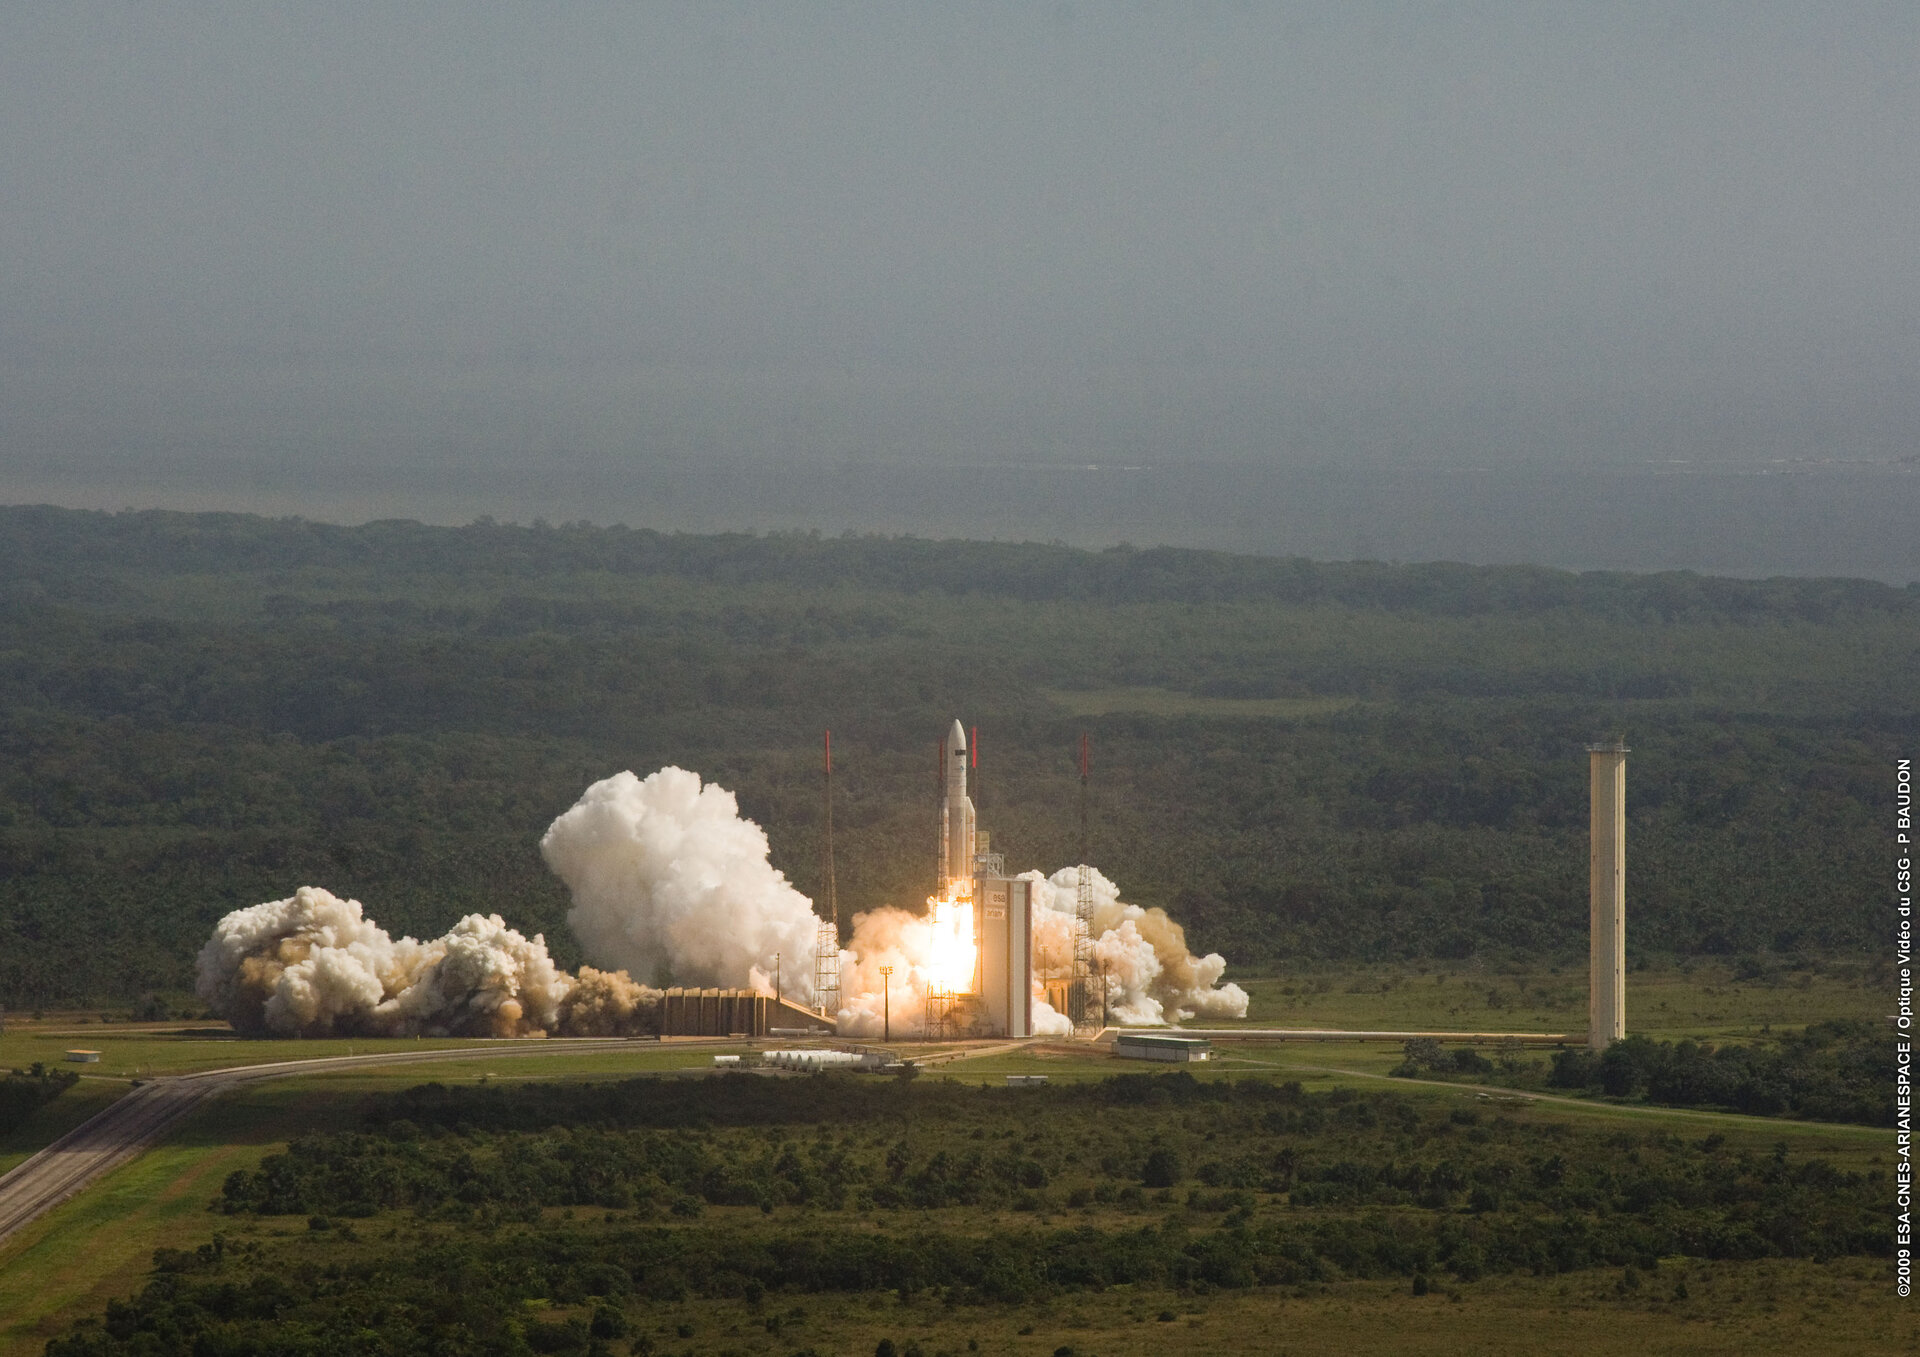 Ariane 5 lift off with Herschel and Planck - 2009